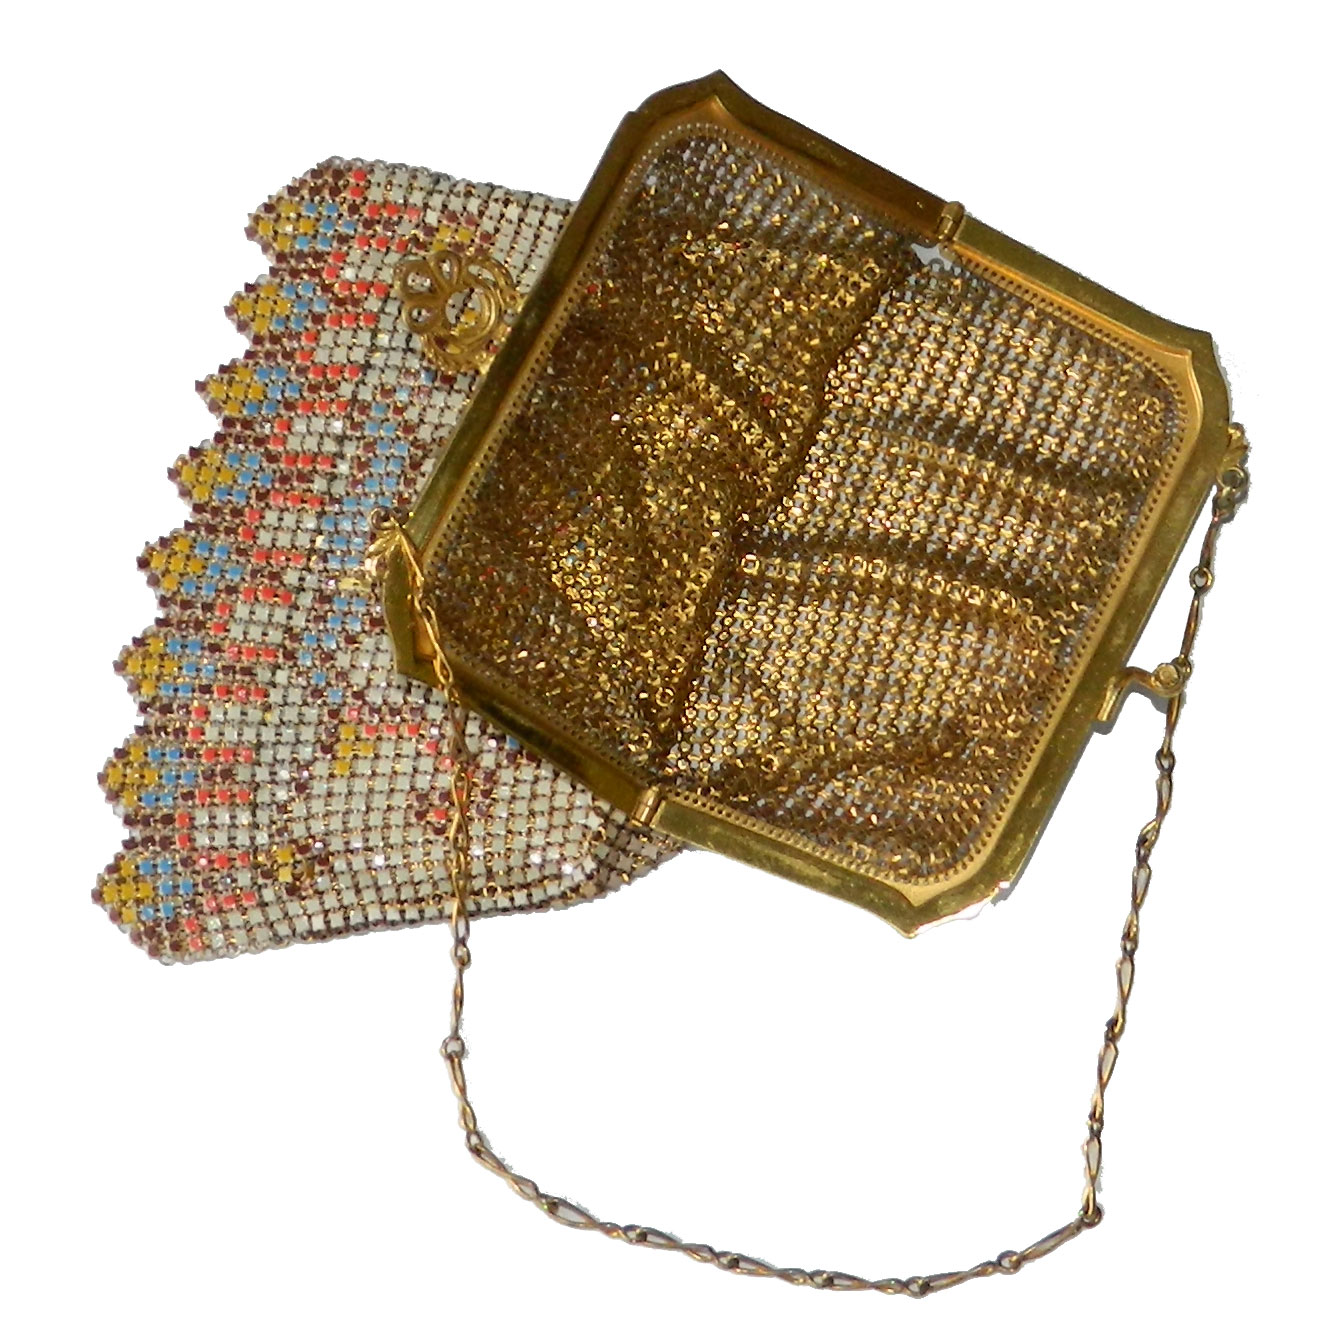 1920's Whiting and Davis mesh handbag